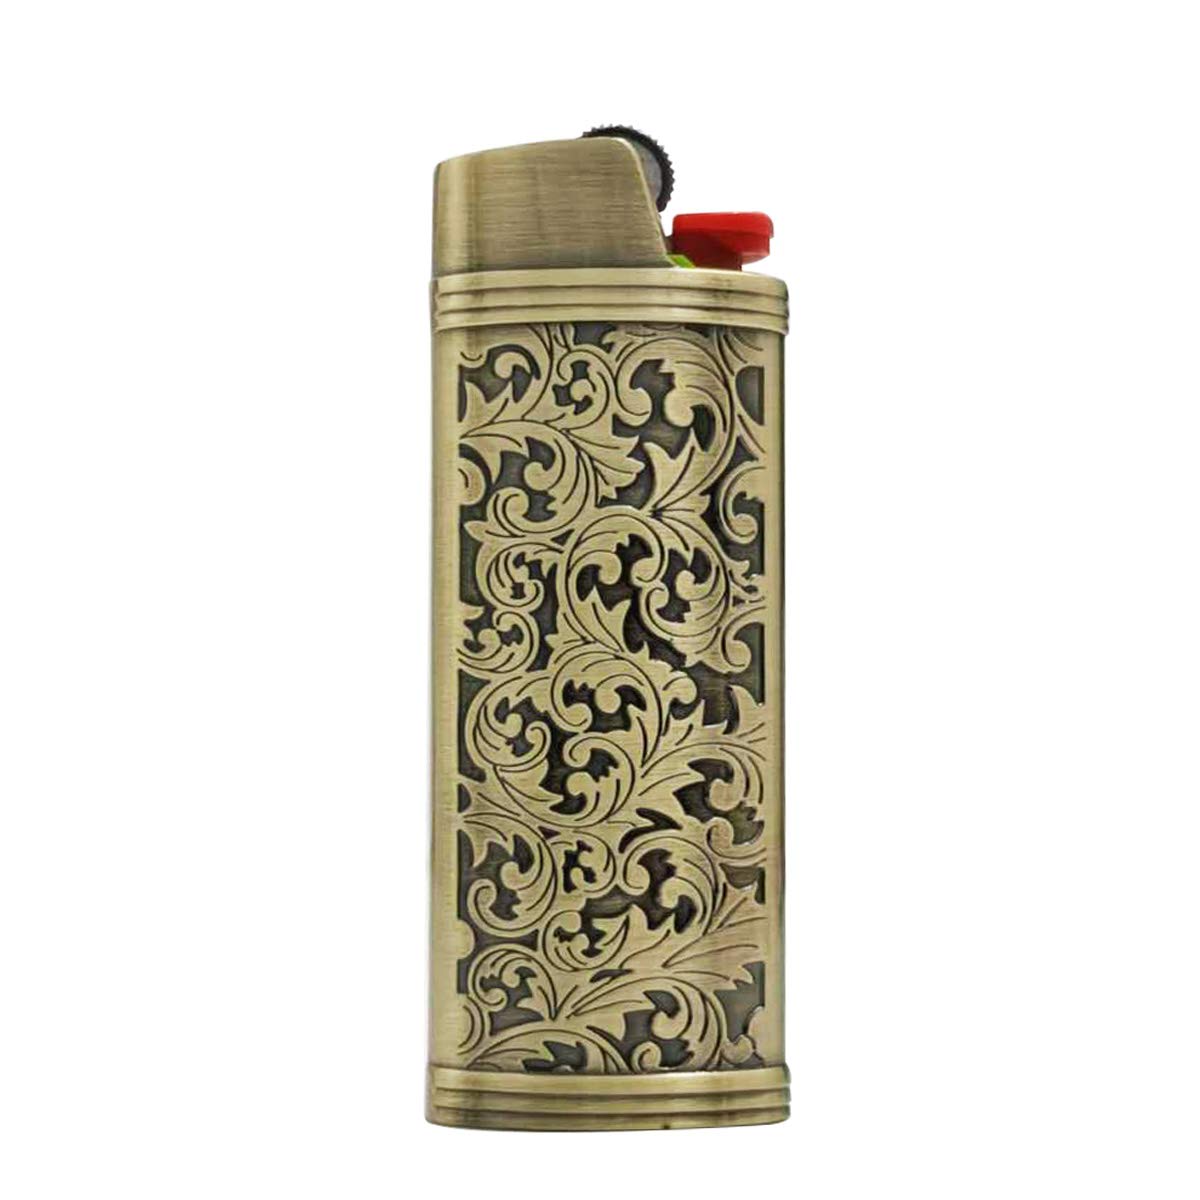 Lighter cover Old Tower on order, designer bronze case for disposable  lighter, handmade smoking souvenir, unique medieval LARP accessories 58832  in online supermarket